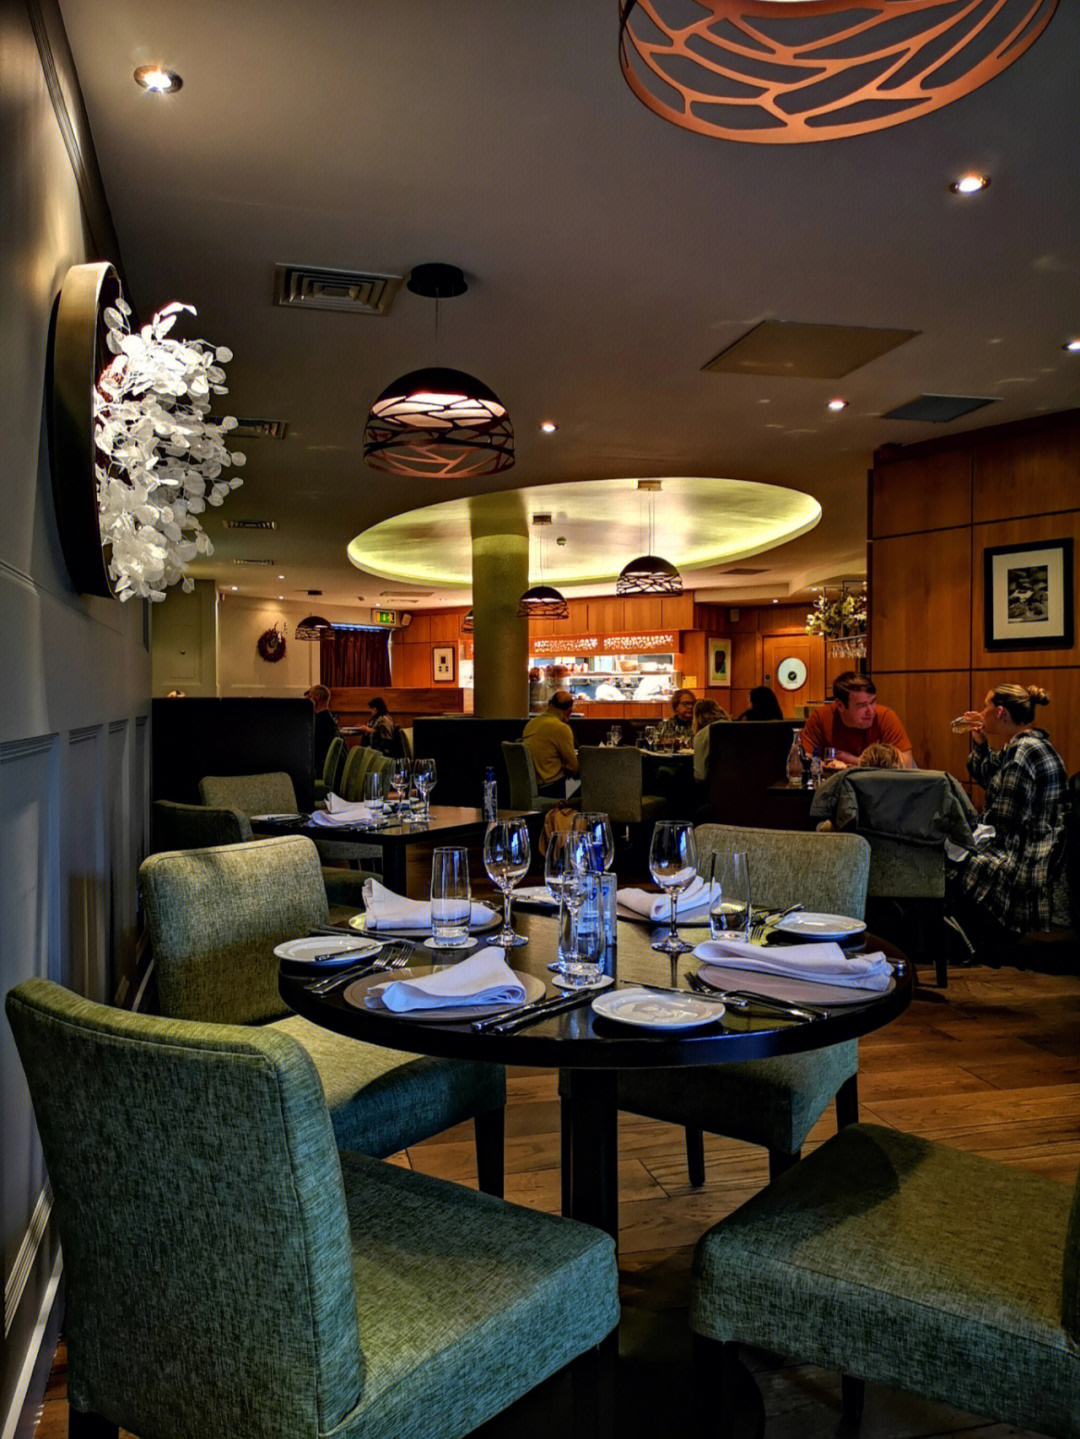 chalet餐厅图片